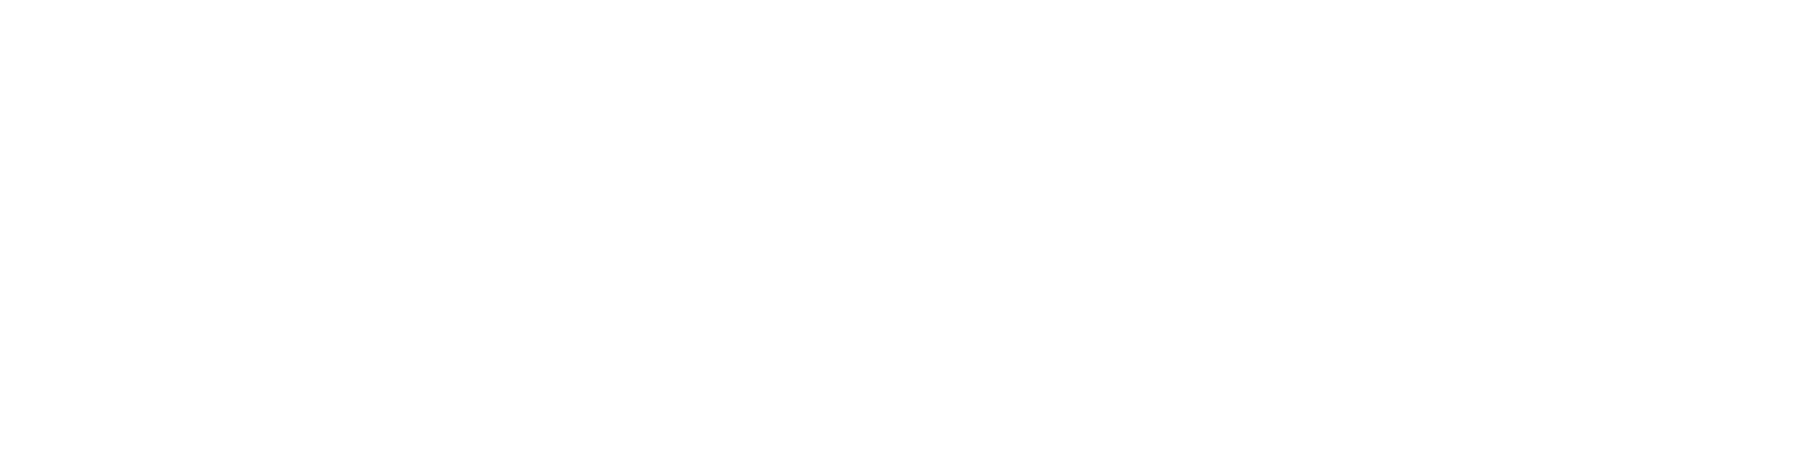 ei-electronics.png